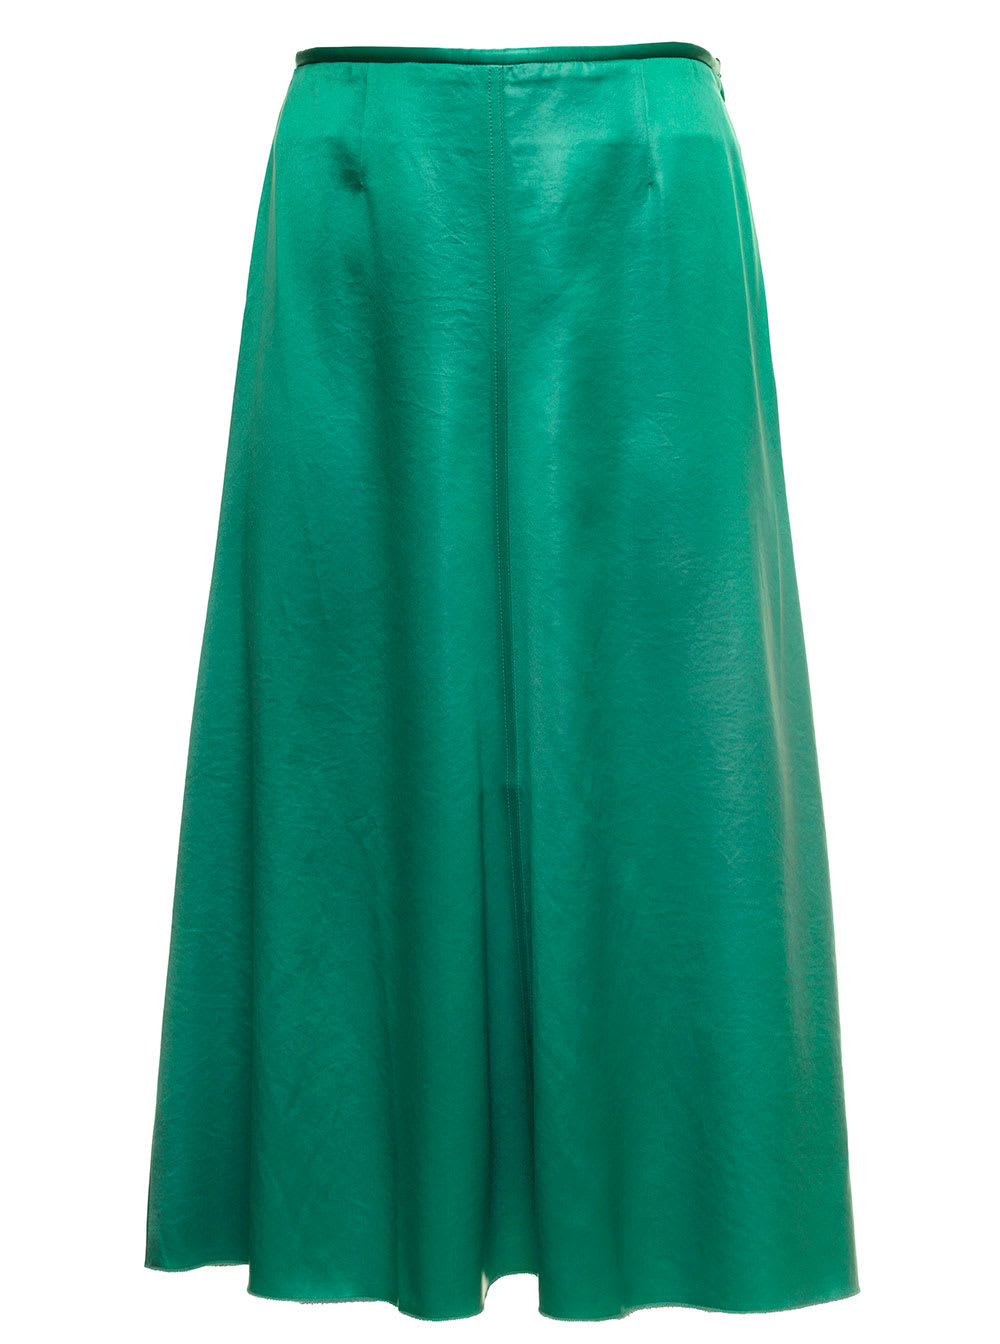 Nanushka Zoya Green Satin Skirt